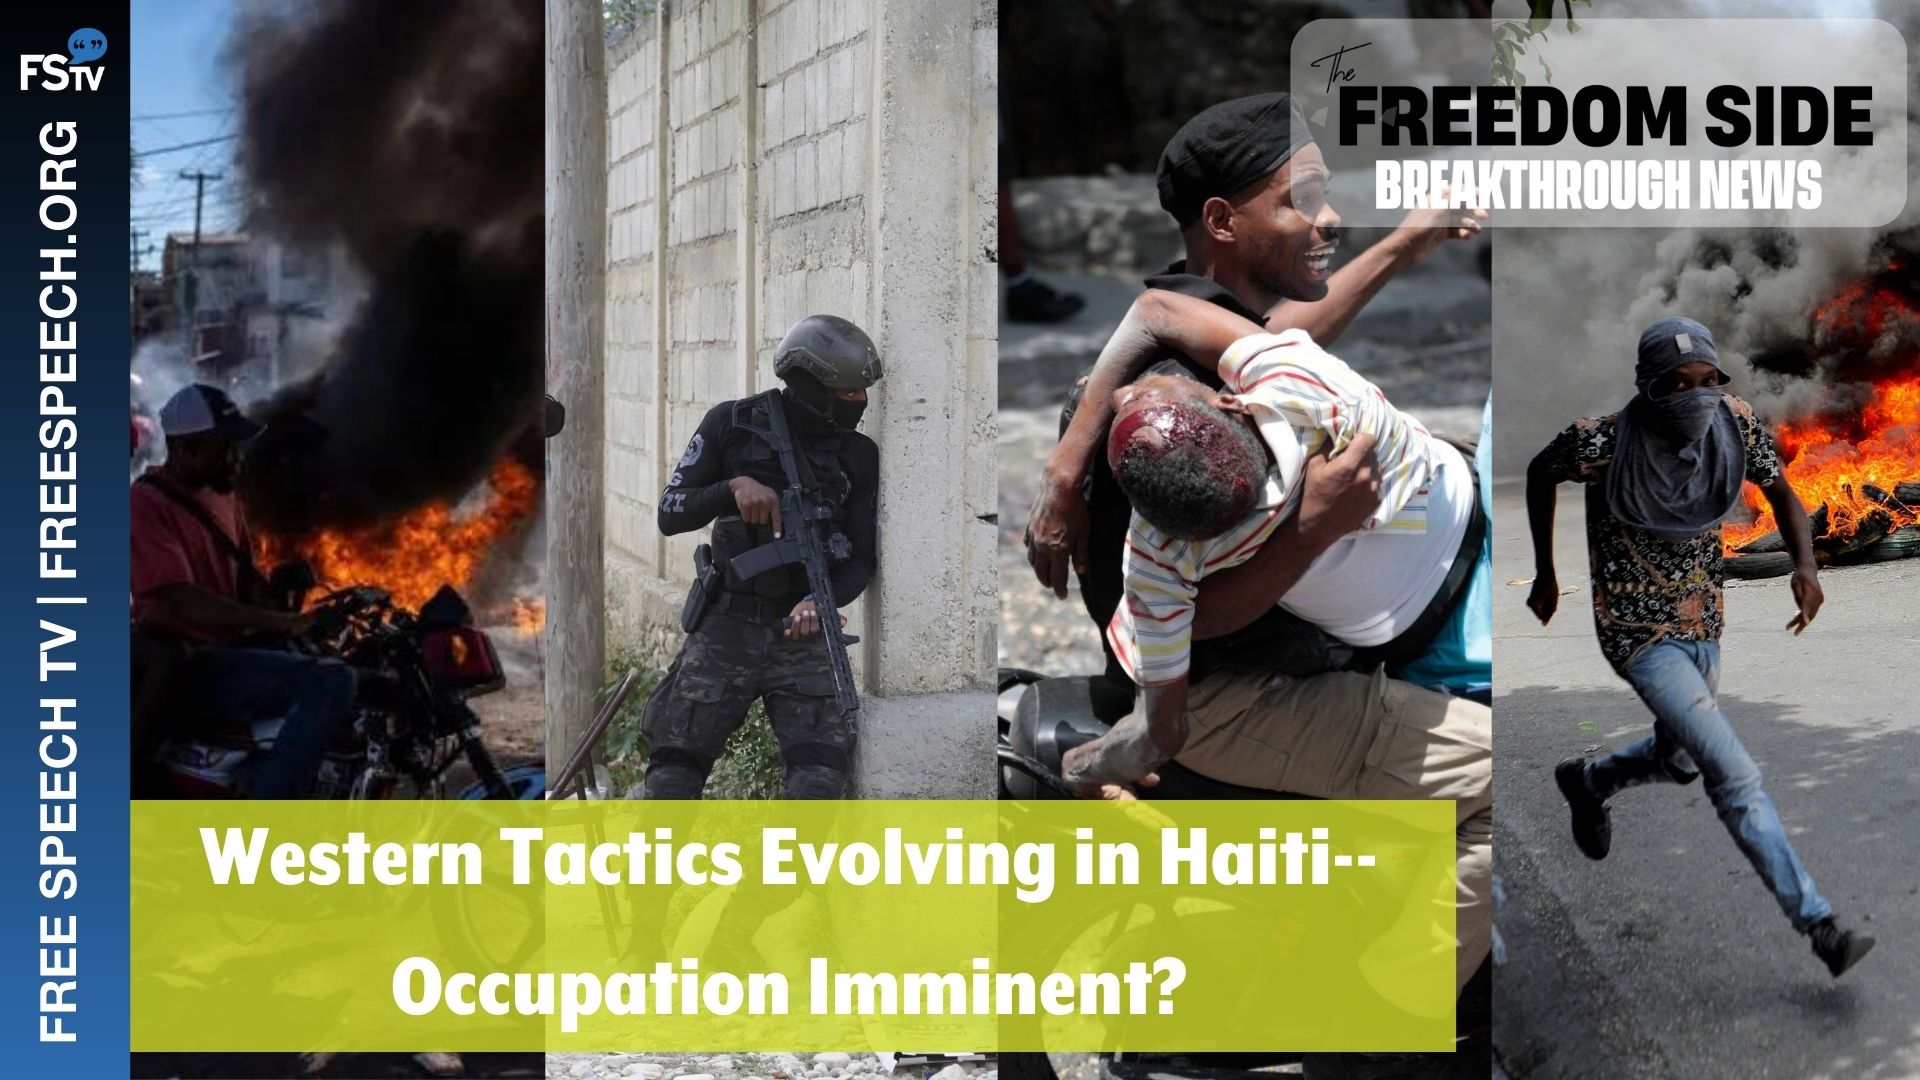 Breakthrough News | Western Tactics Evolving in Haiti-- Occupation Imminent?